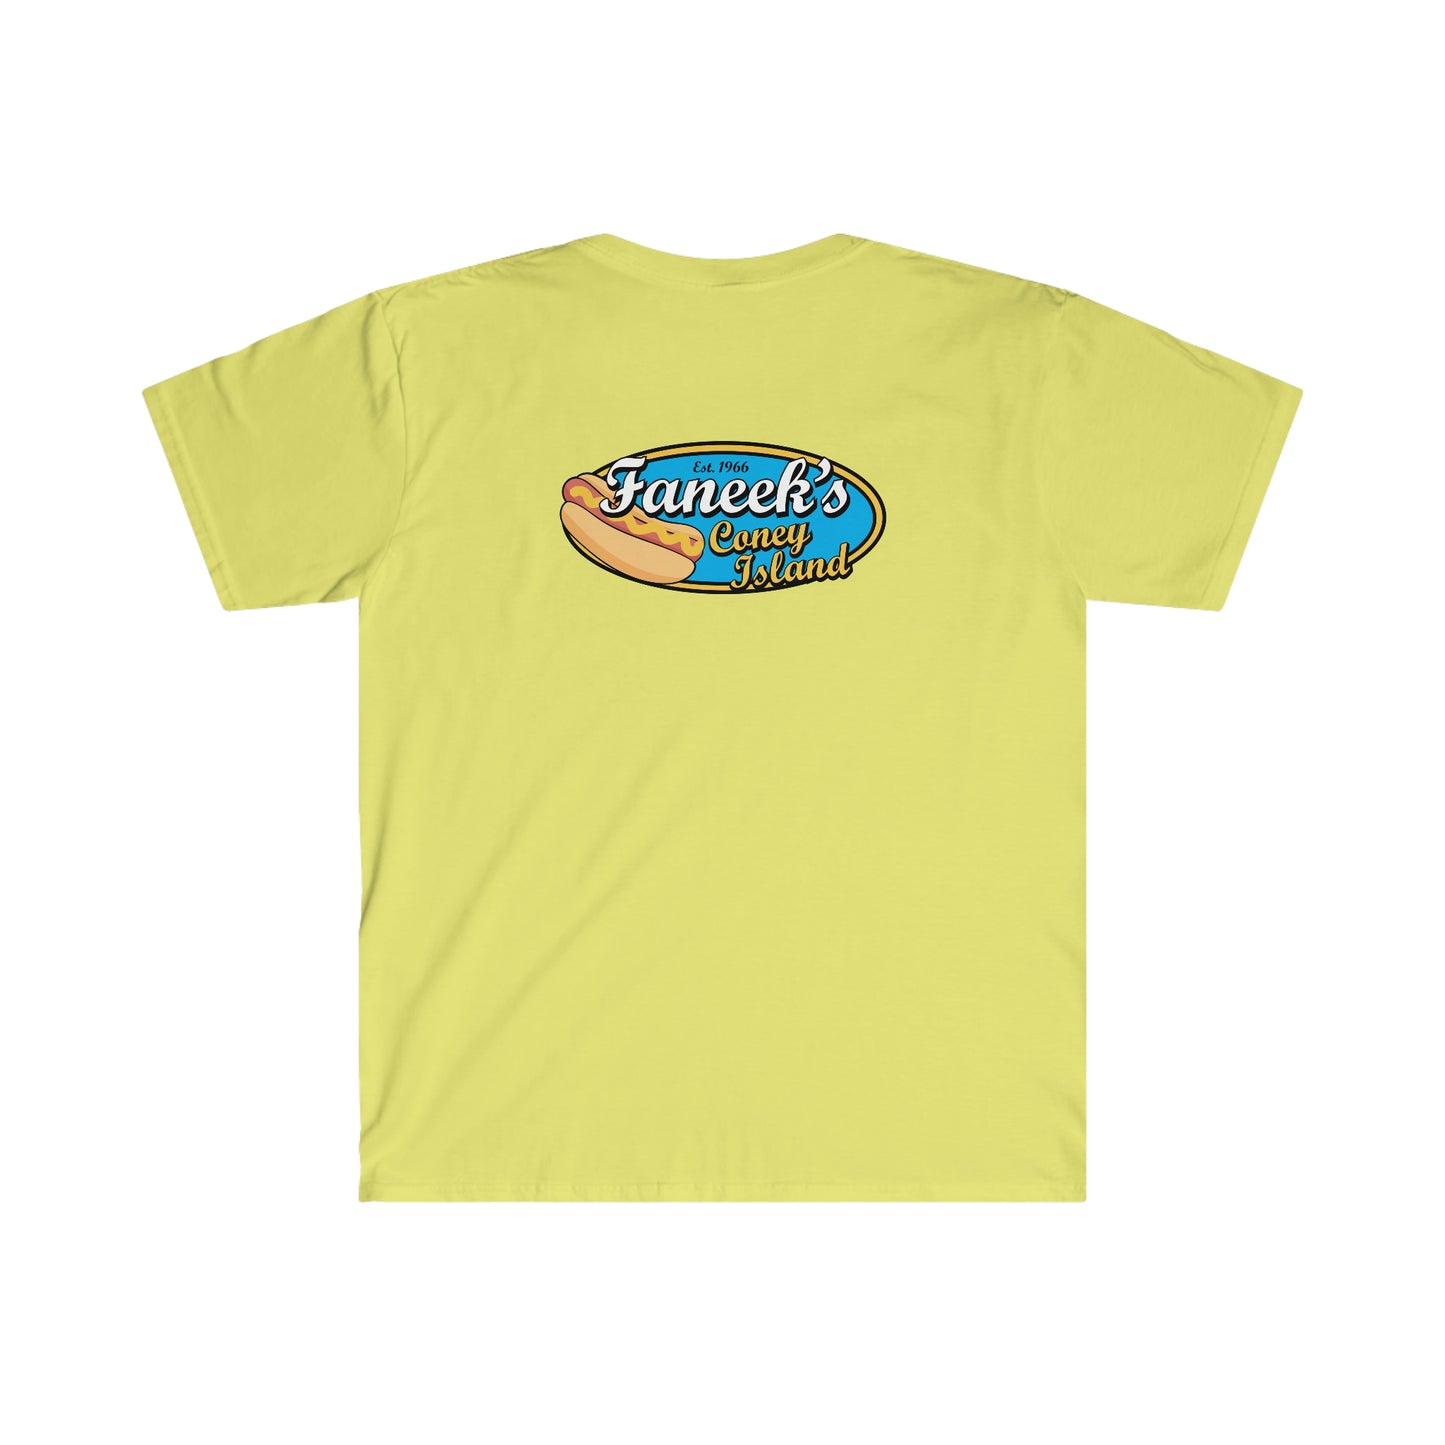 Cheap Thrills Unisex Softstyle T-Shirt